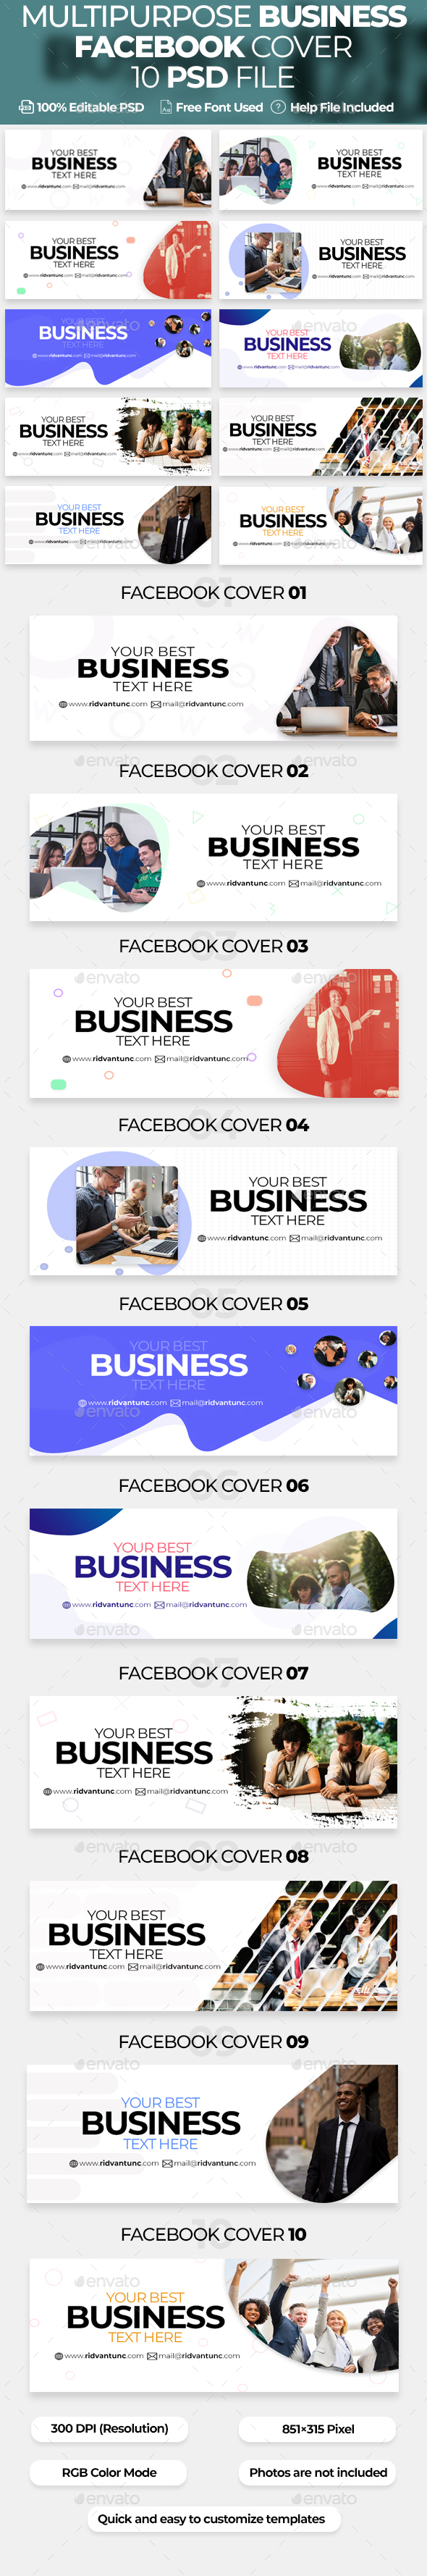 Multipurpose Business 10 Facebook Cover - Facebook Timeline Covers Social Media